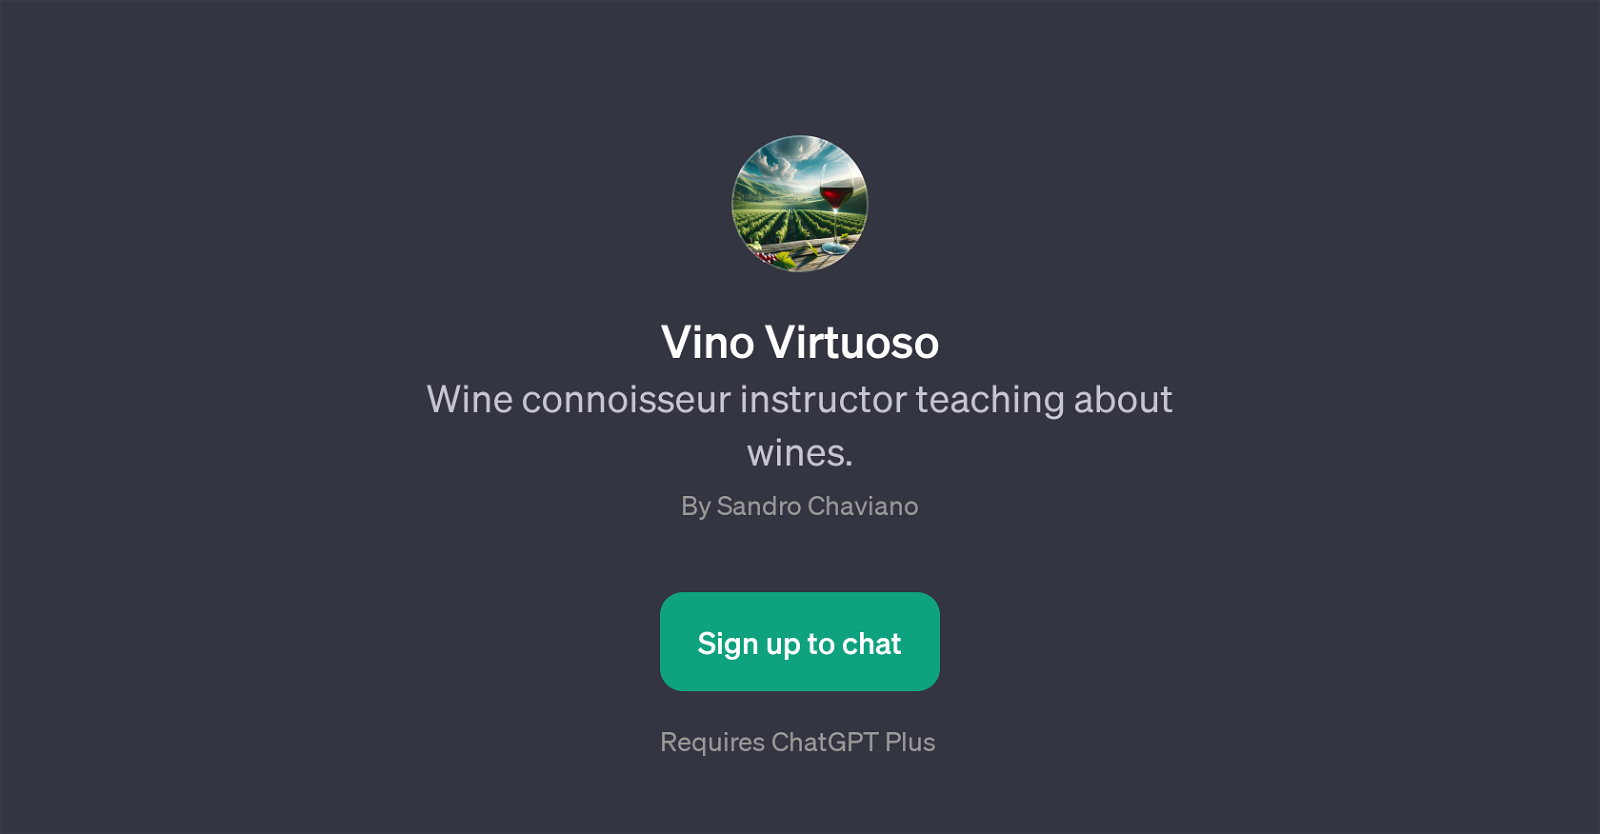 Vino Virtuoso website